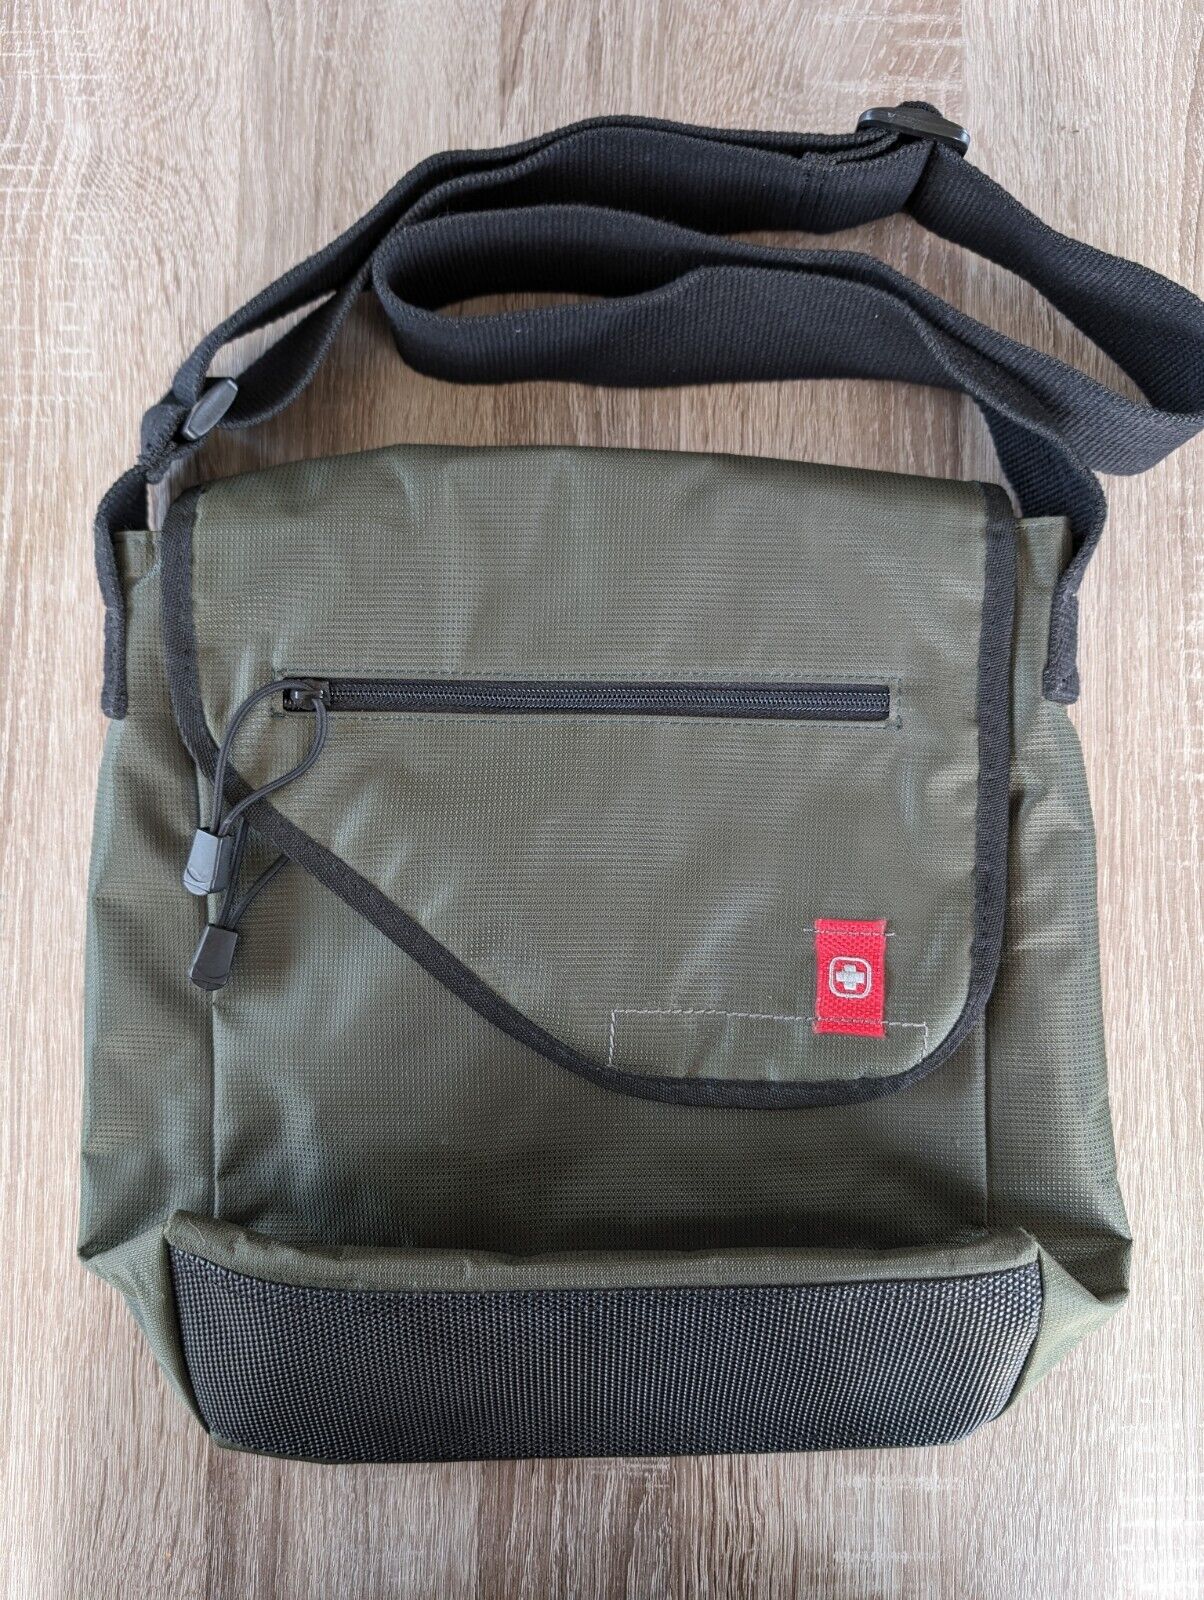 Wenger Swiss Gear Olive Green Crossbody Tote Carryall Work Messenger Bag